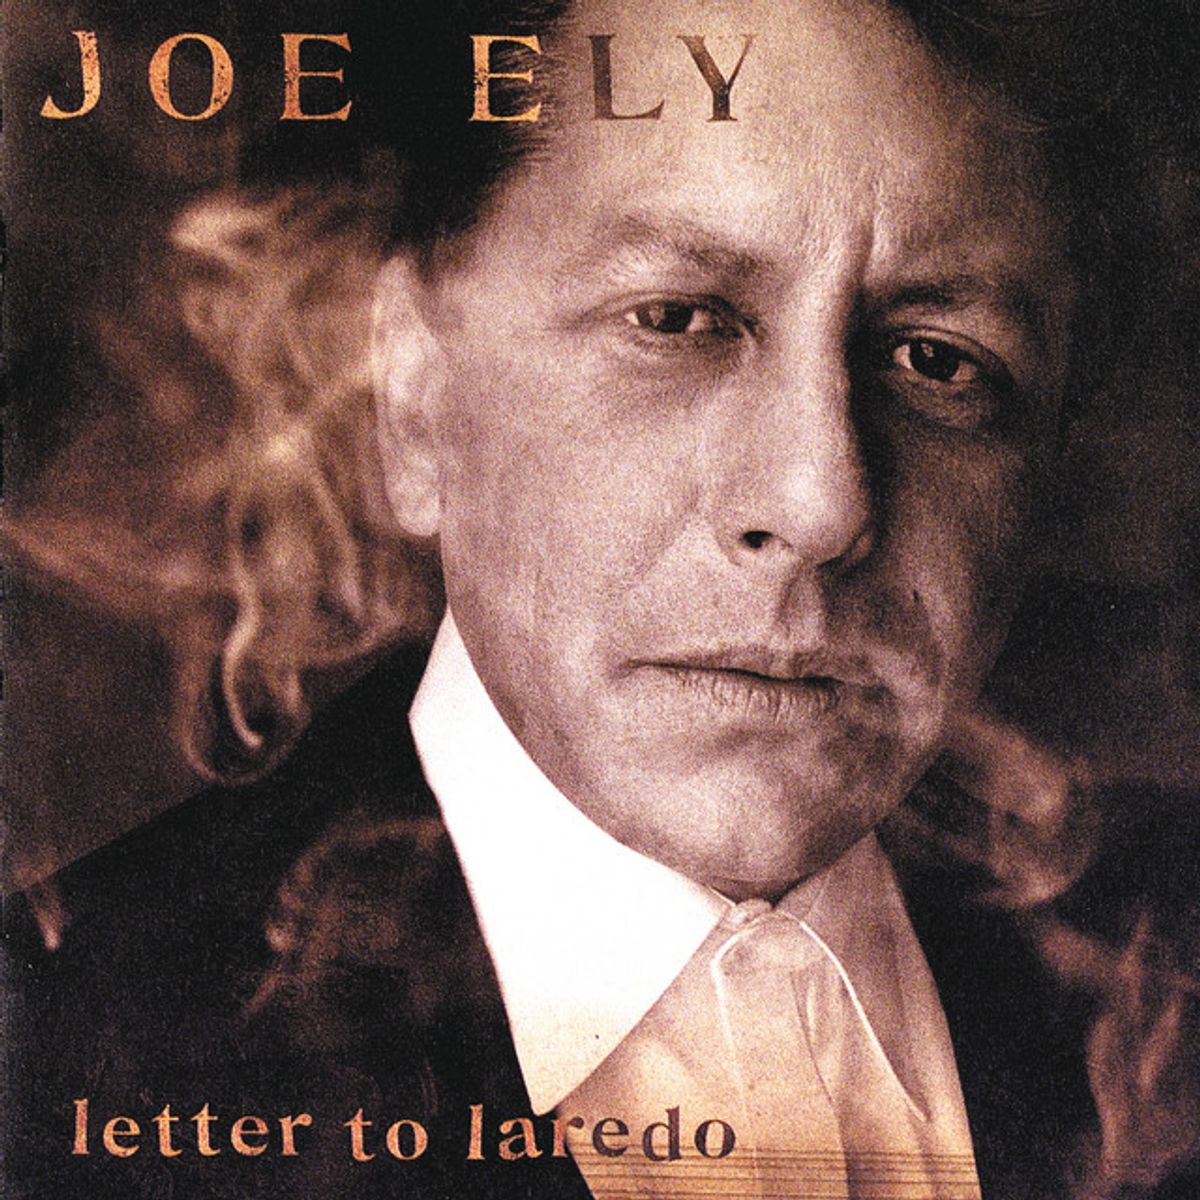 #TheBossStaatBij - Joe Ely - All Just To Get To You (1995)